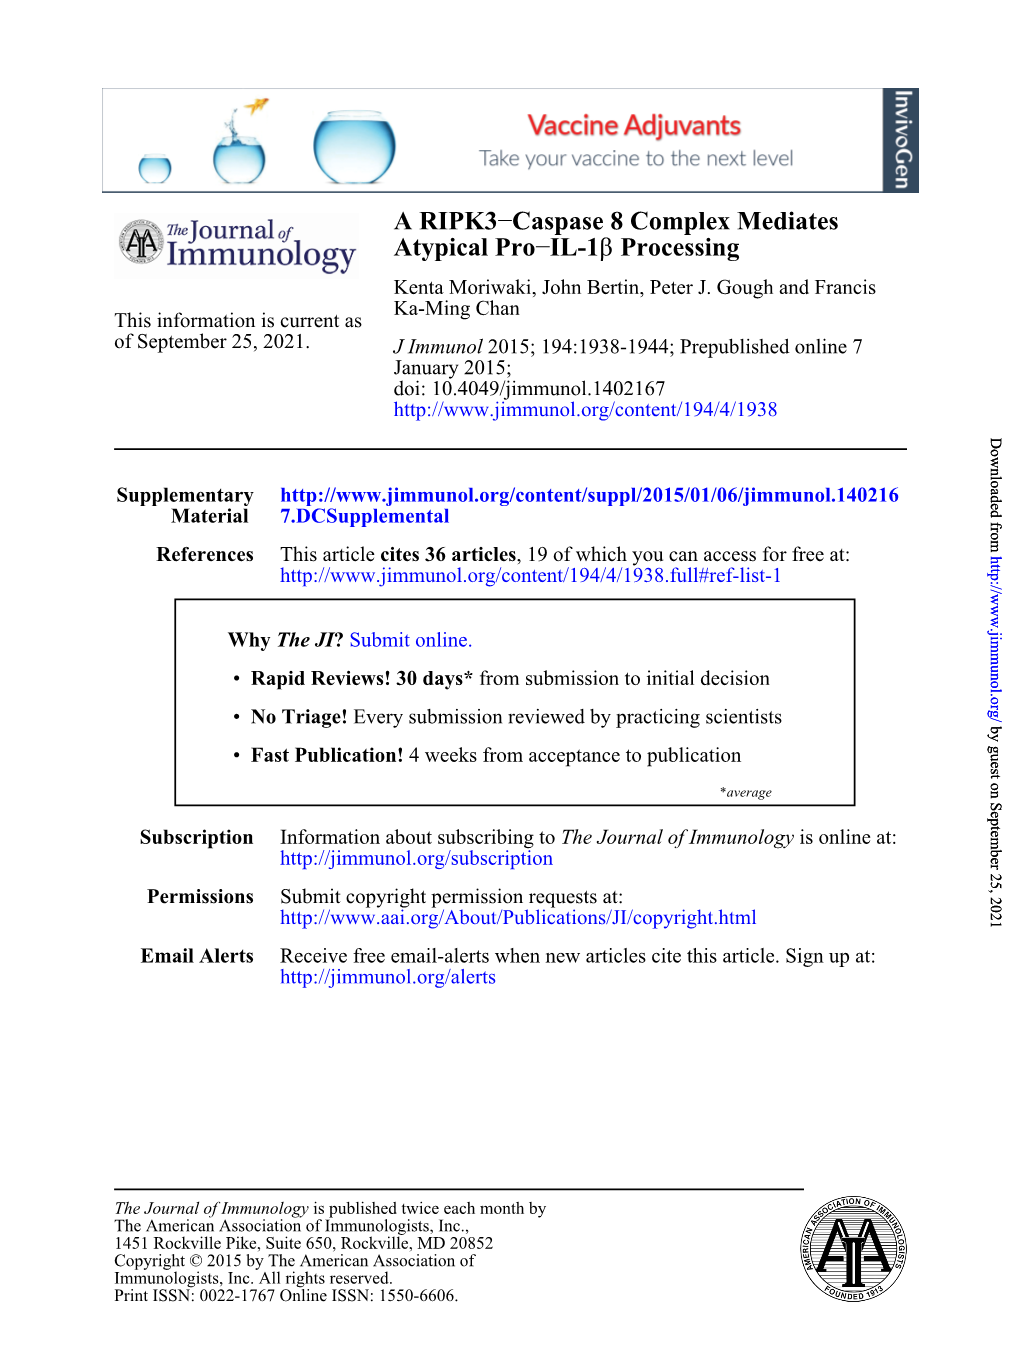 Atypical Pro Caspase 8 Complex Mediates − a RIPK3